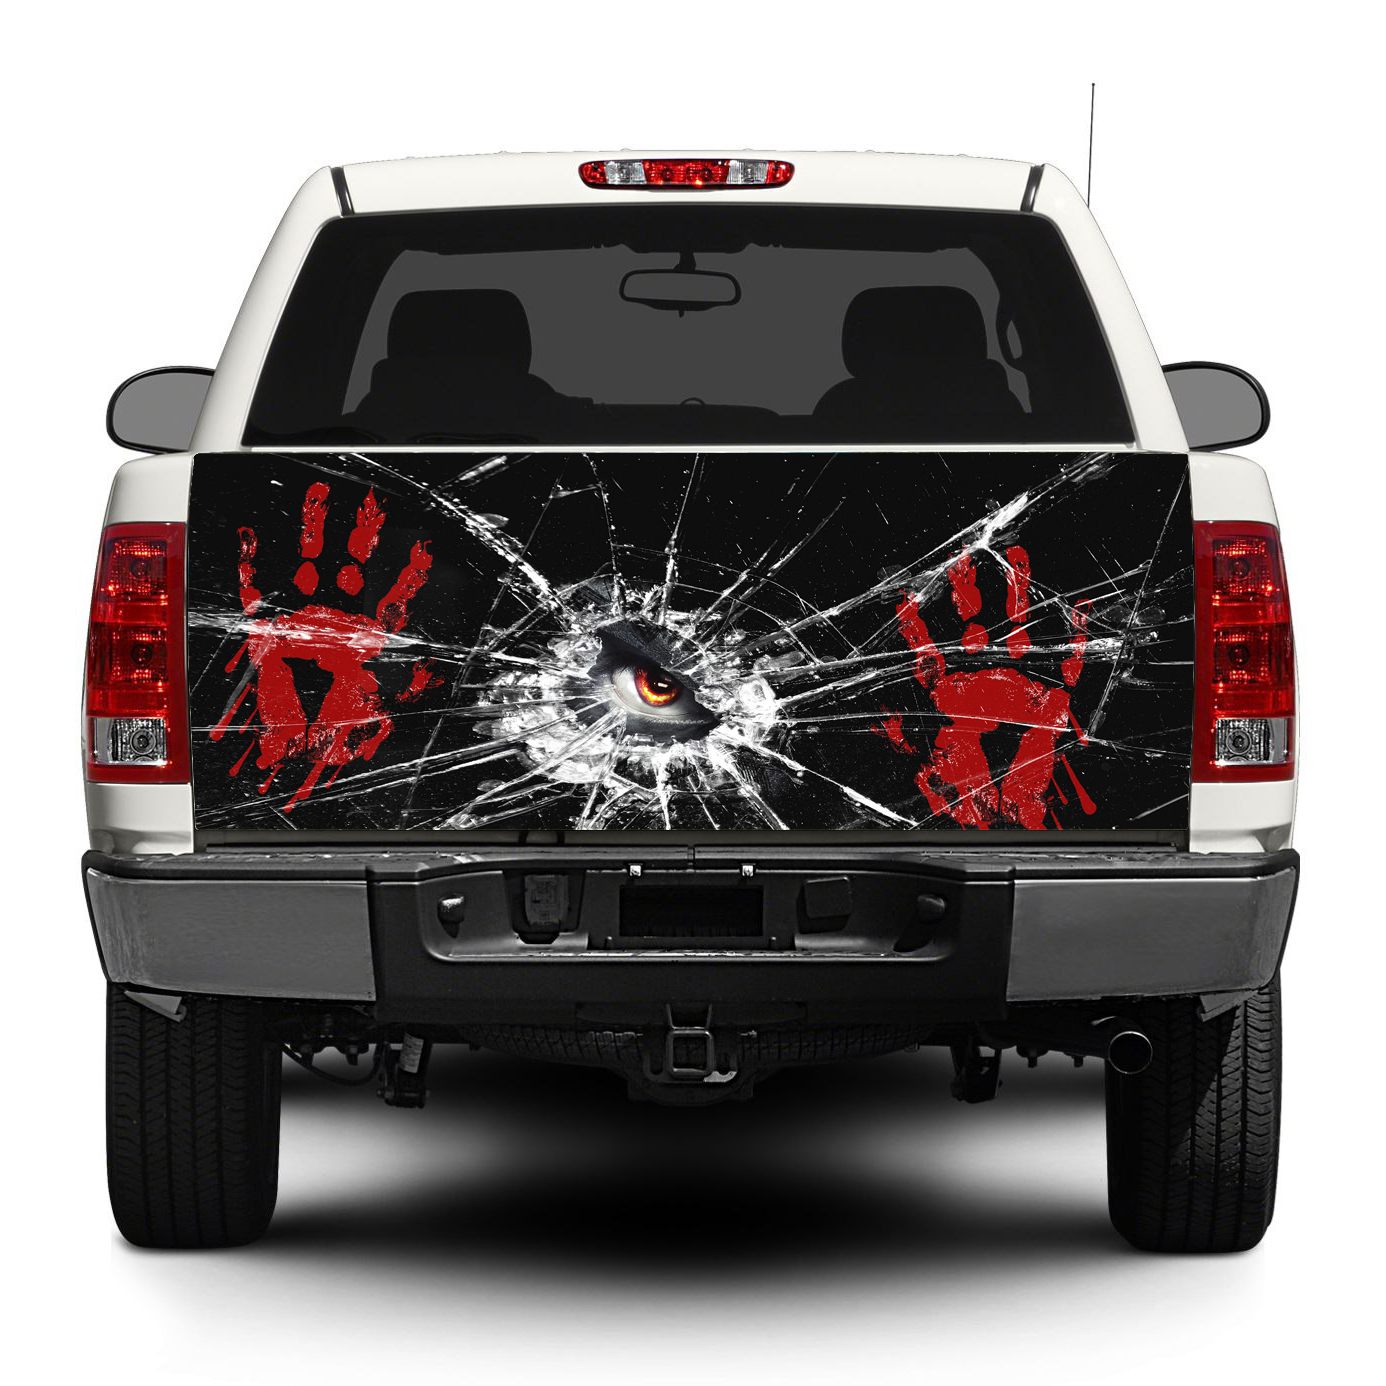 Blood Hands Broken Broken Broken Dical Decal Sticker Wrap Pick-up Truck Suv